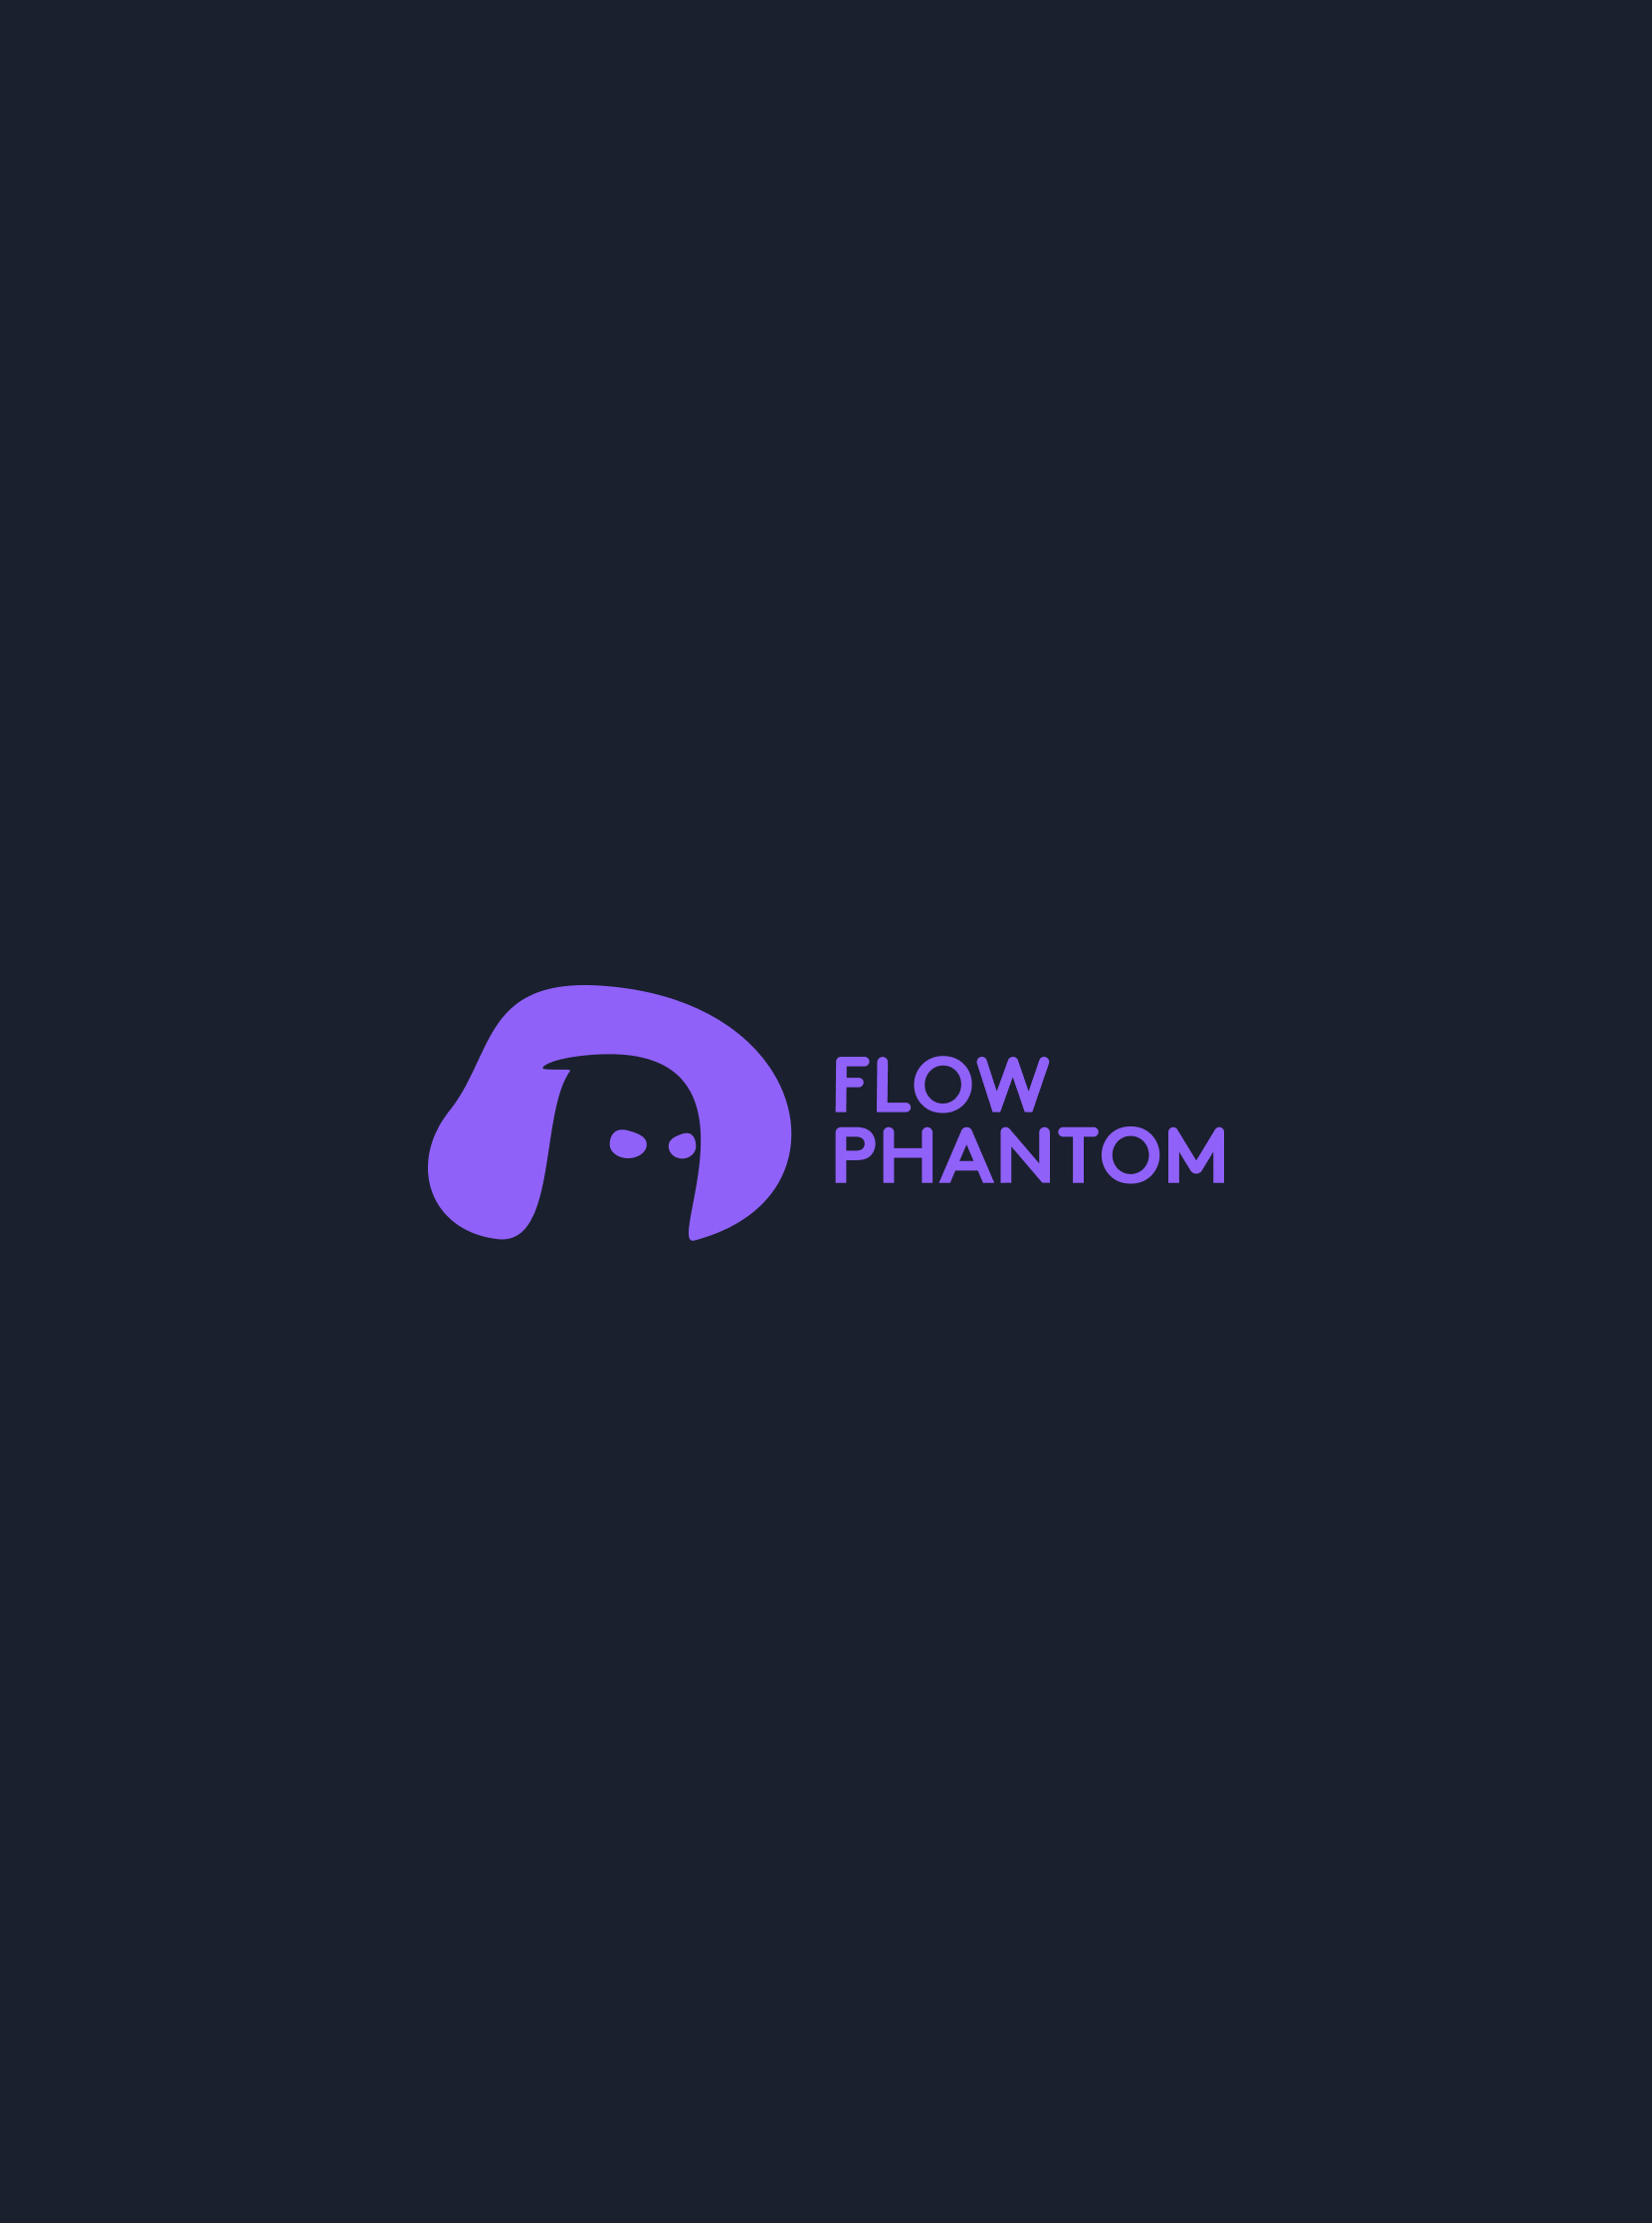 Flow Phantom logo